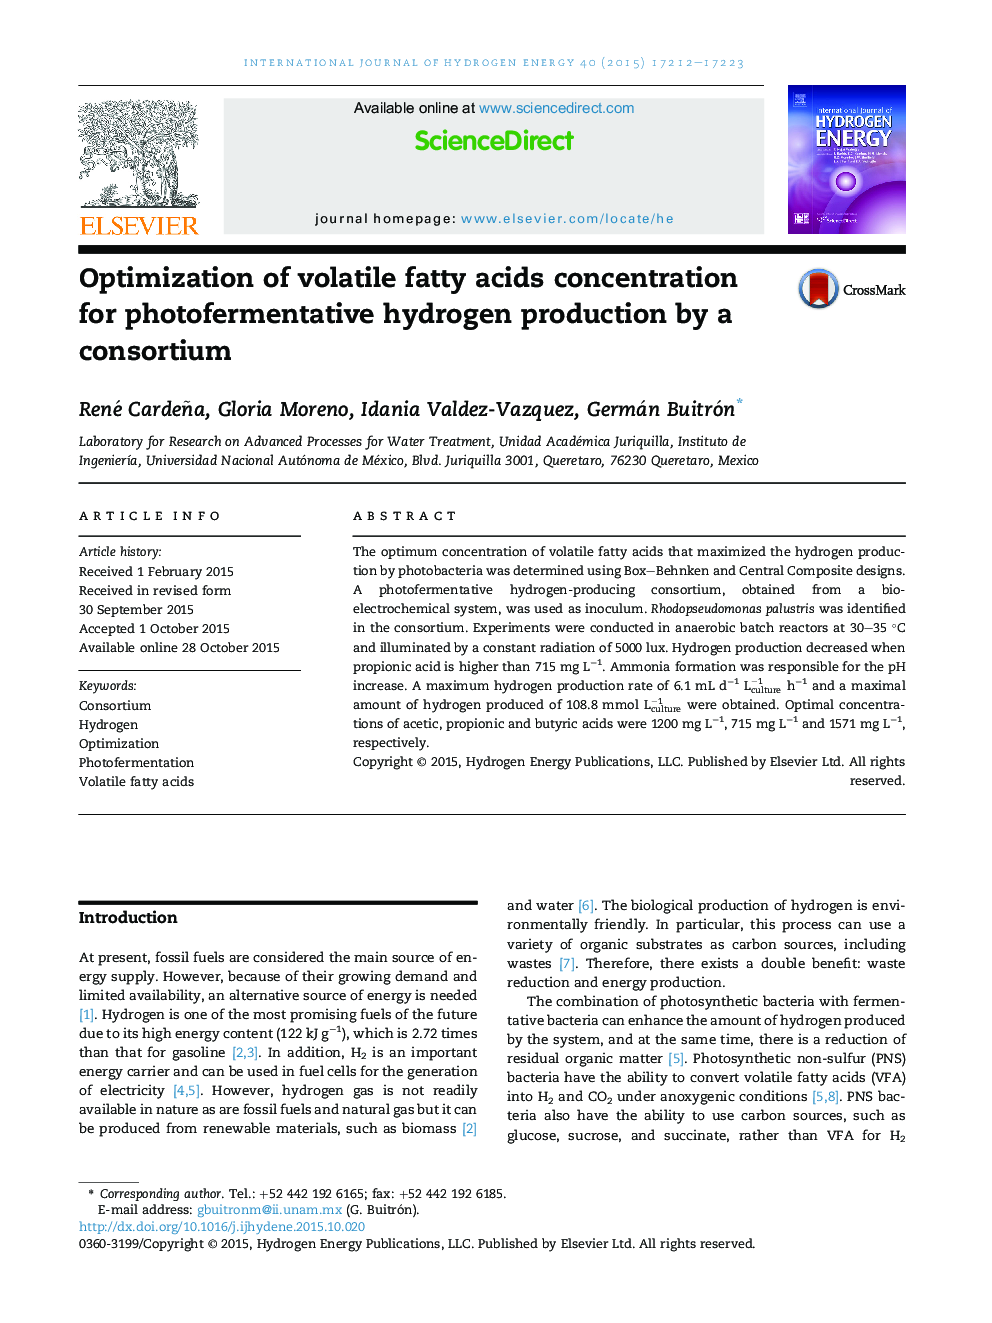 Optimization of volatile fatty acids concentration for photofermentative hydrogen production by a consortium